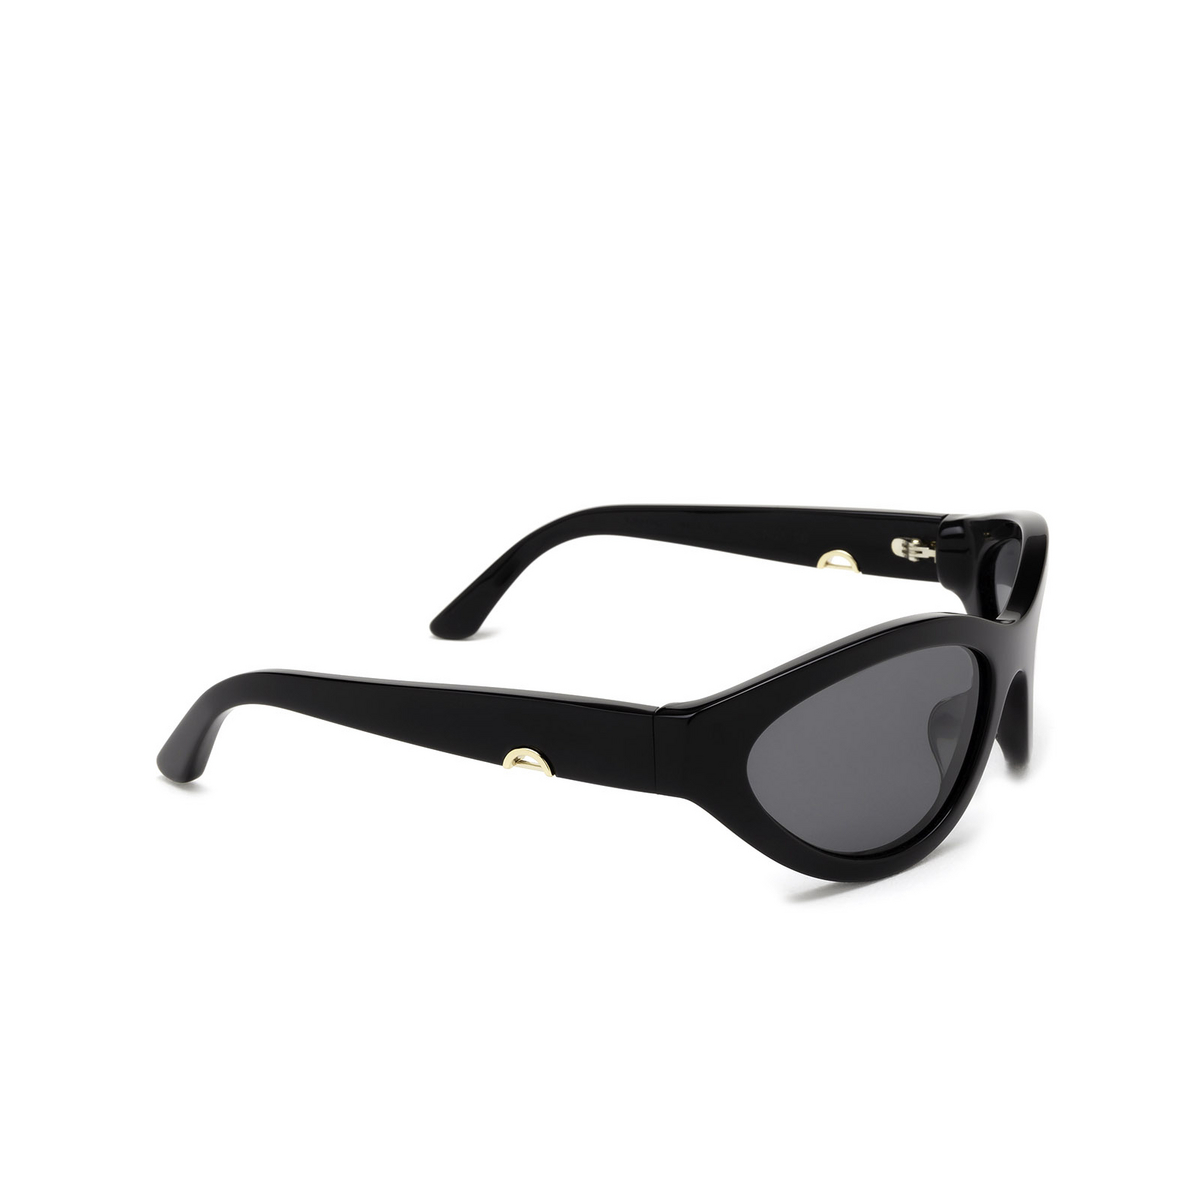 Huma® Mask Sunglasses: Linda color Black 06 - three-quarters view.